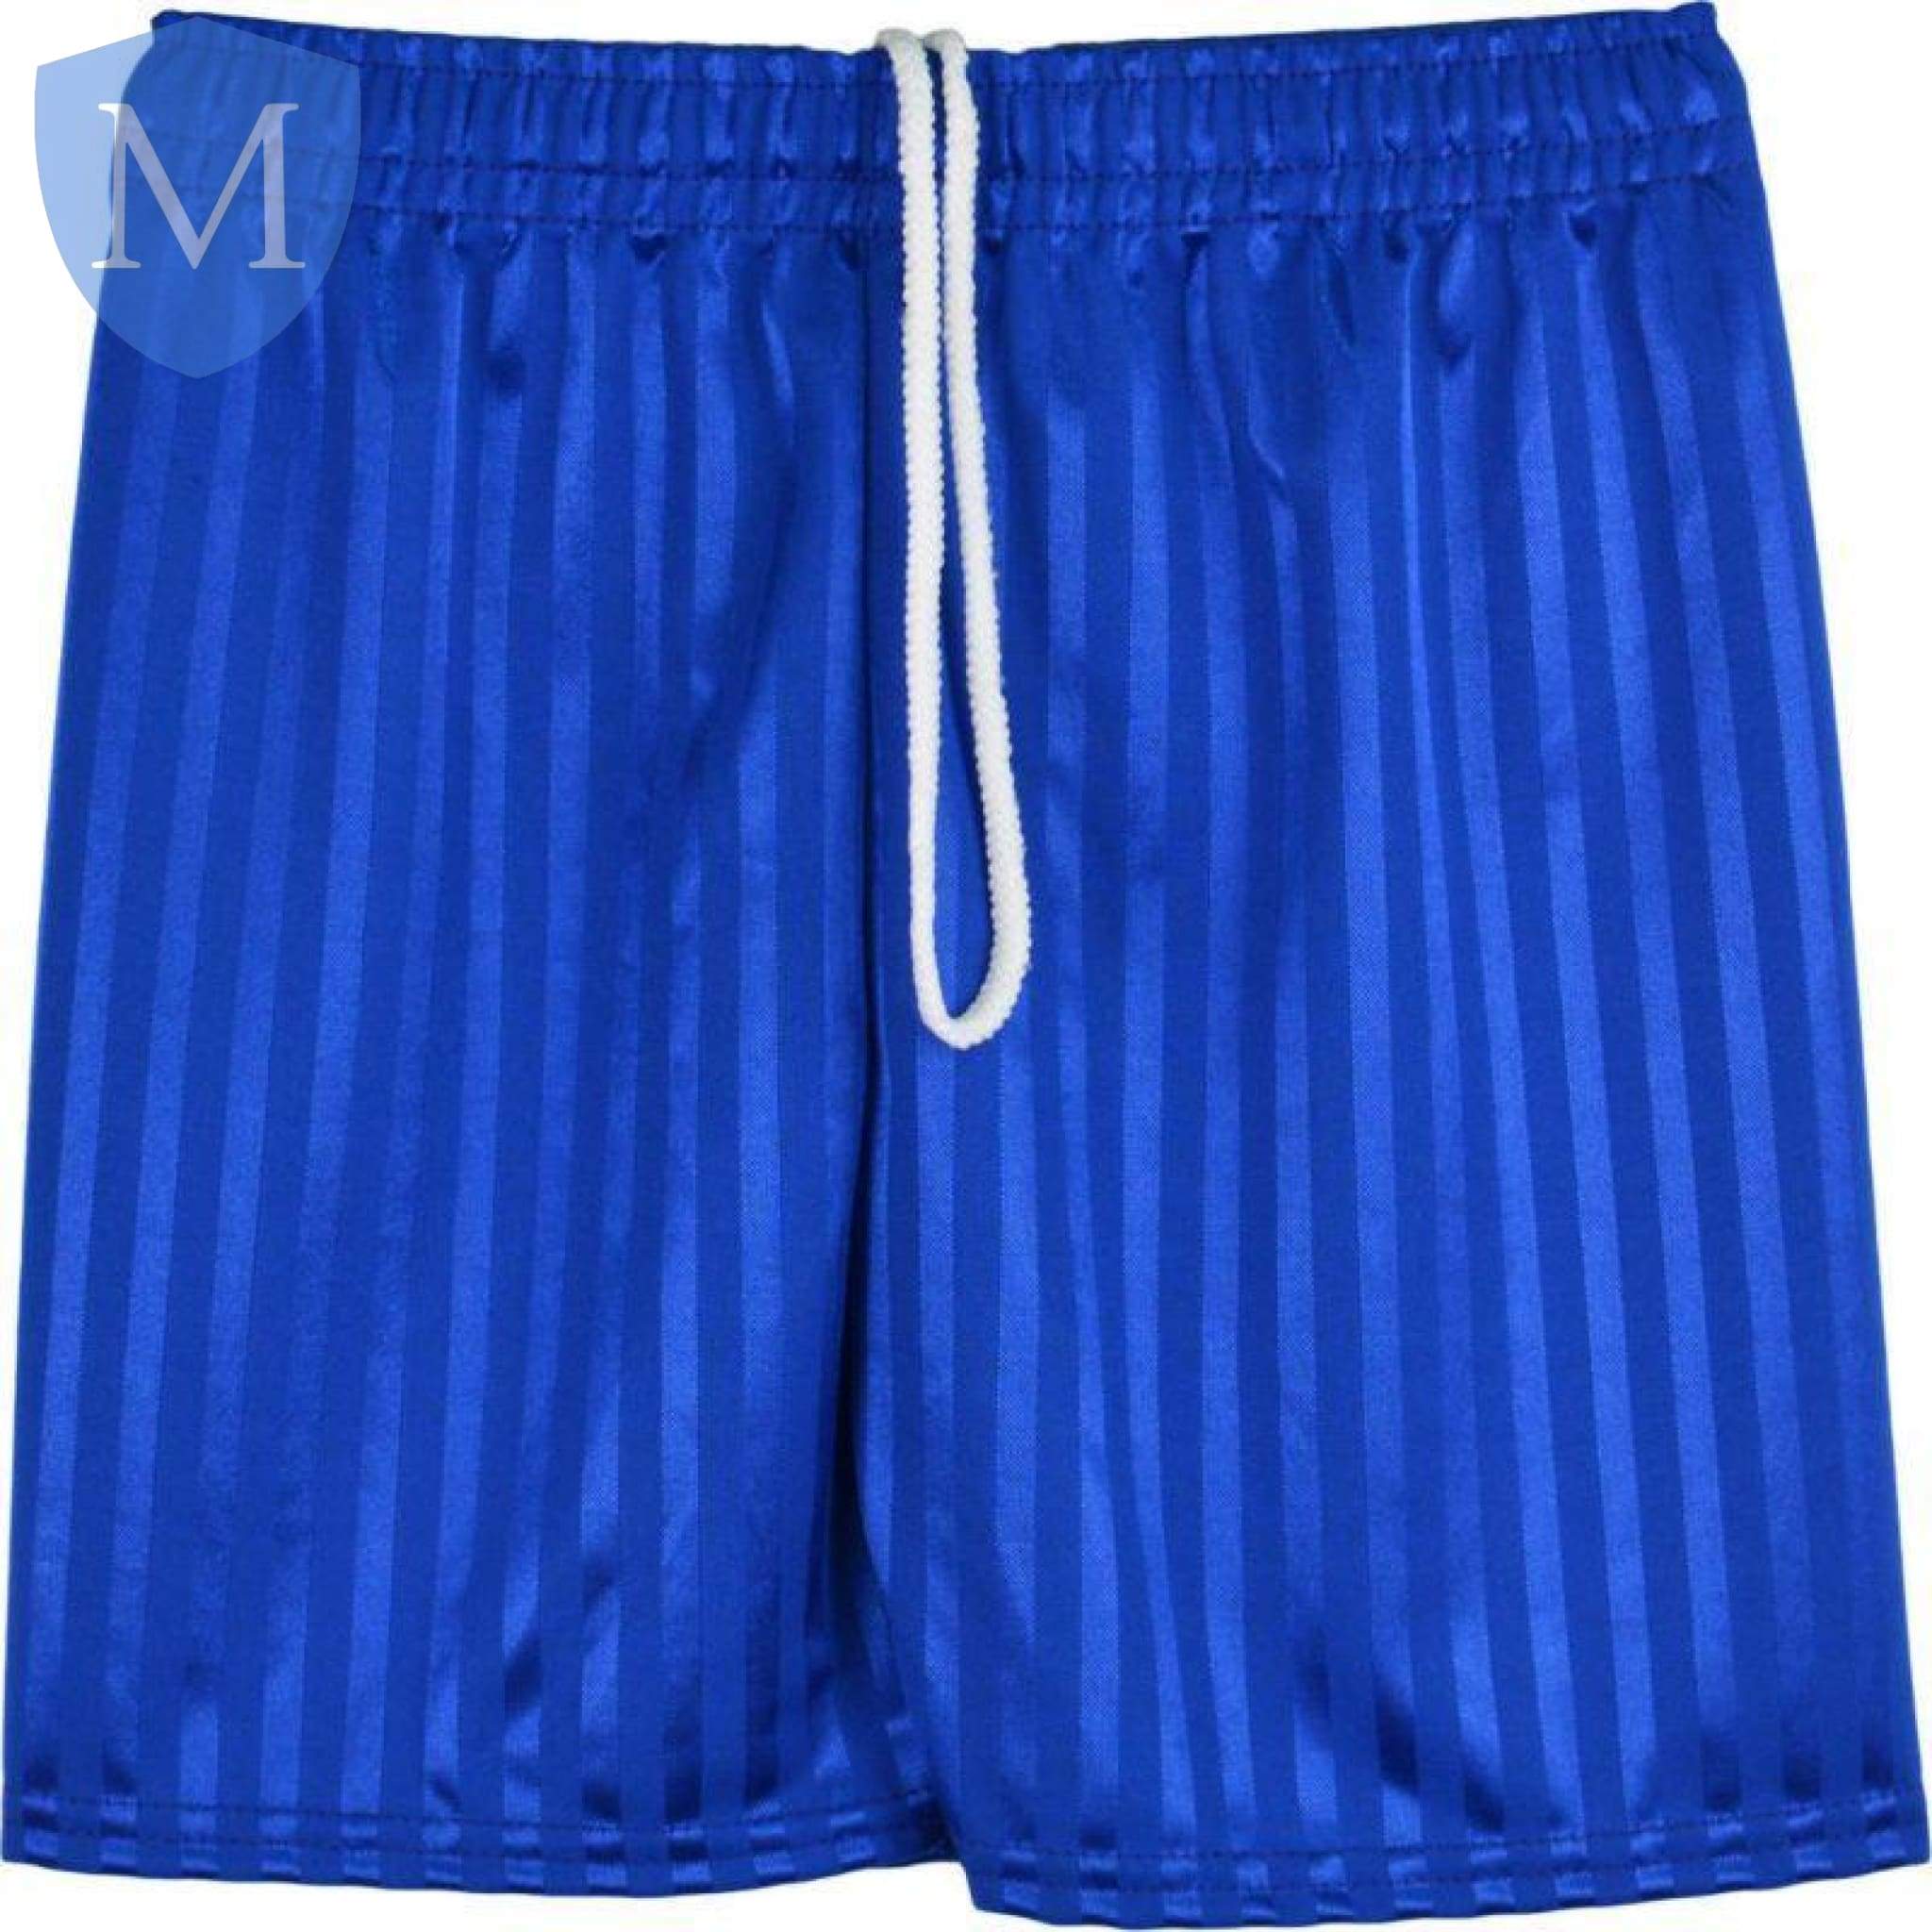 Plain Sports Shadow Shorts - Royal Blue Size 11-12,Size 2-3,Size 2XL,Size 3-4,Size 4-5,Size 5-6,Size 7-8,Size 9-10,Size Large,Size Medium,Size Small,Size XL